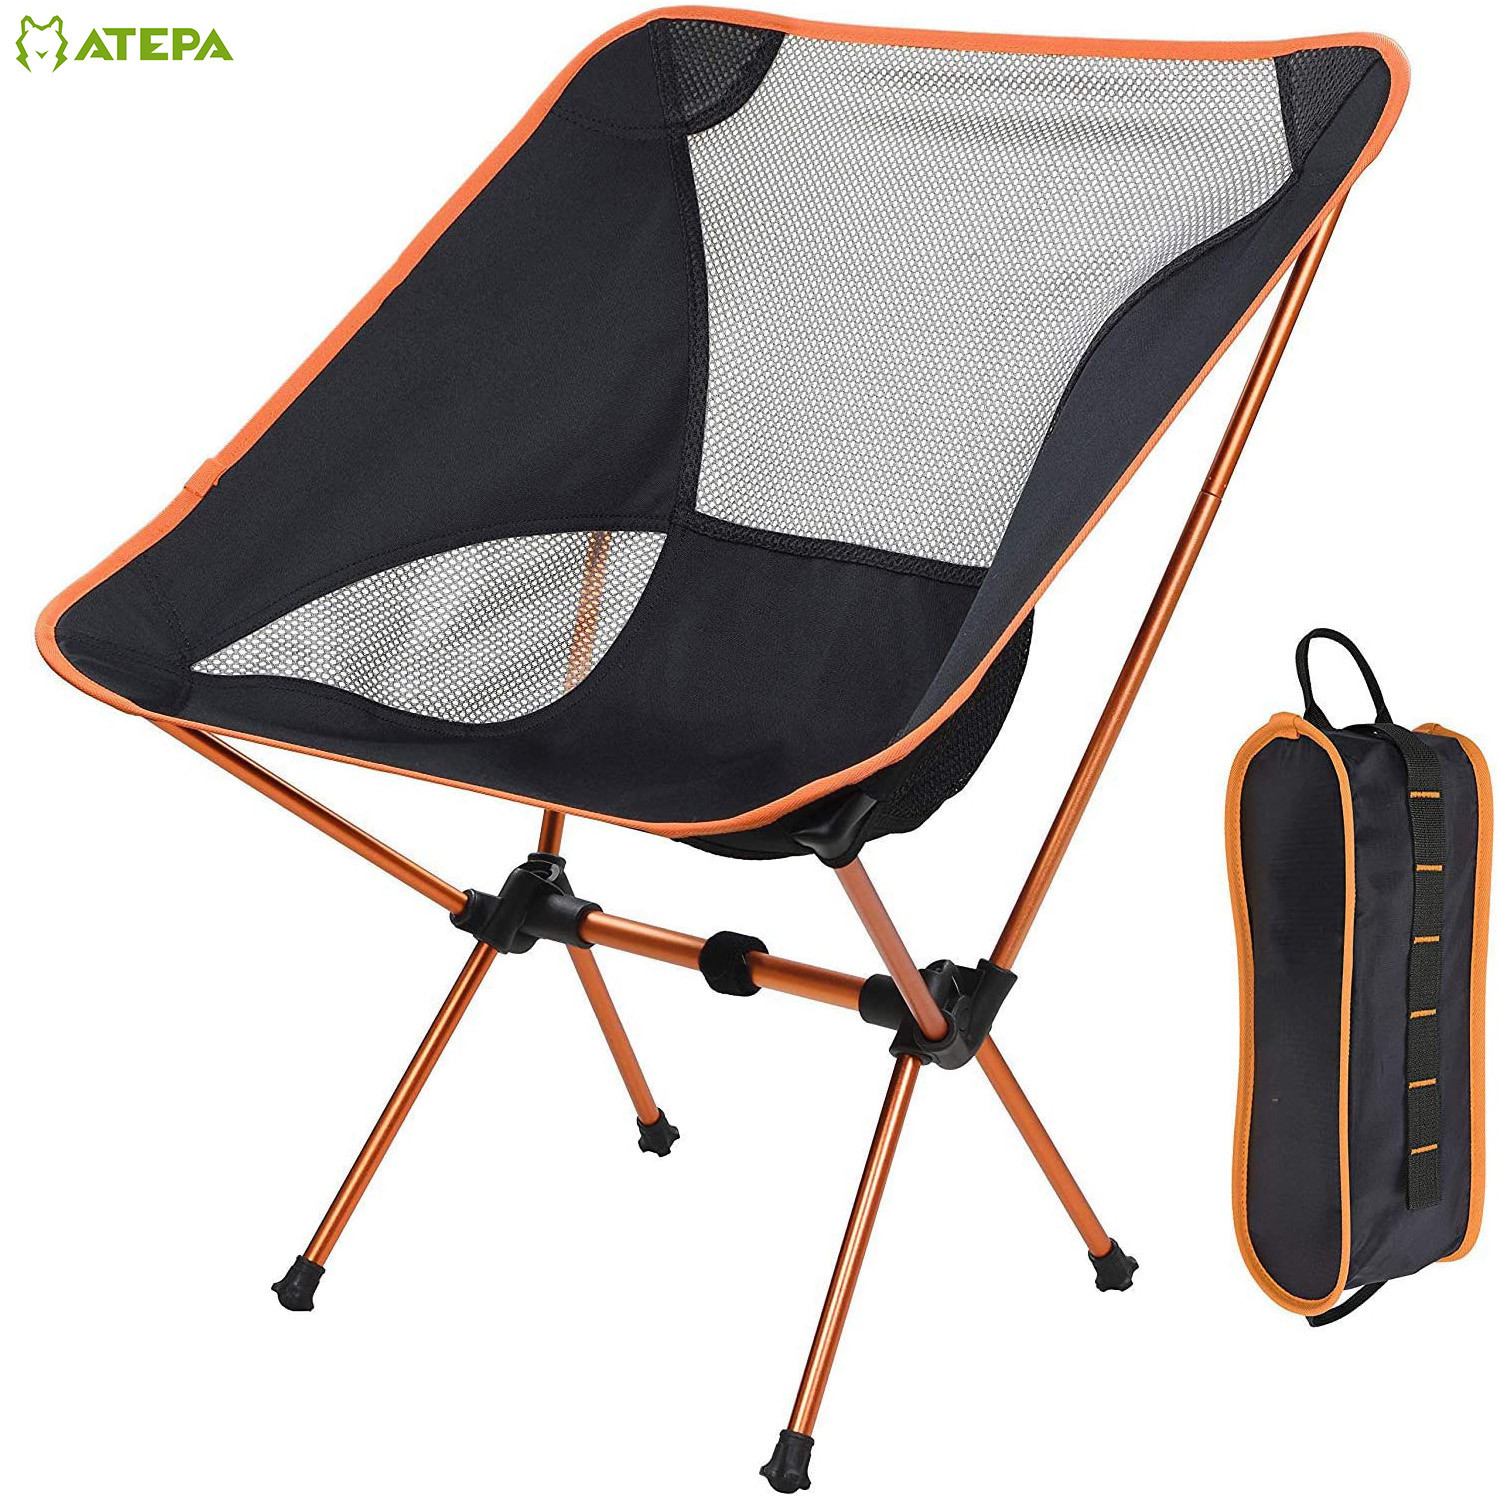 Atepa Ultralight Backpacking Camping Cycling Hiking Portable Chair